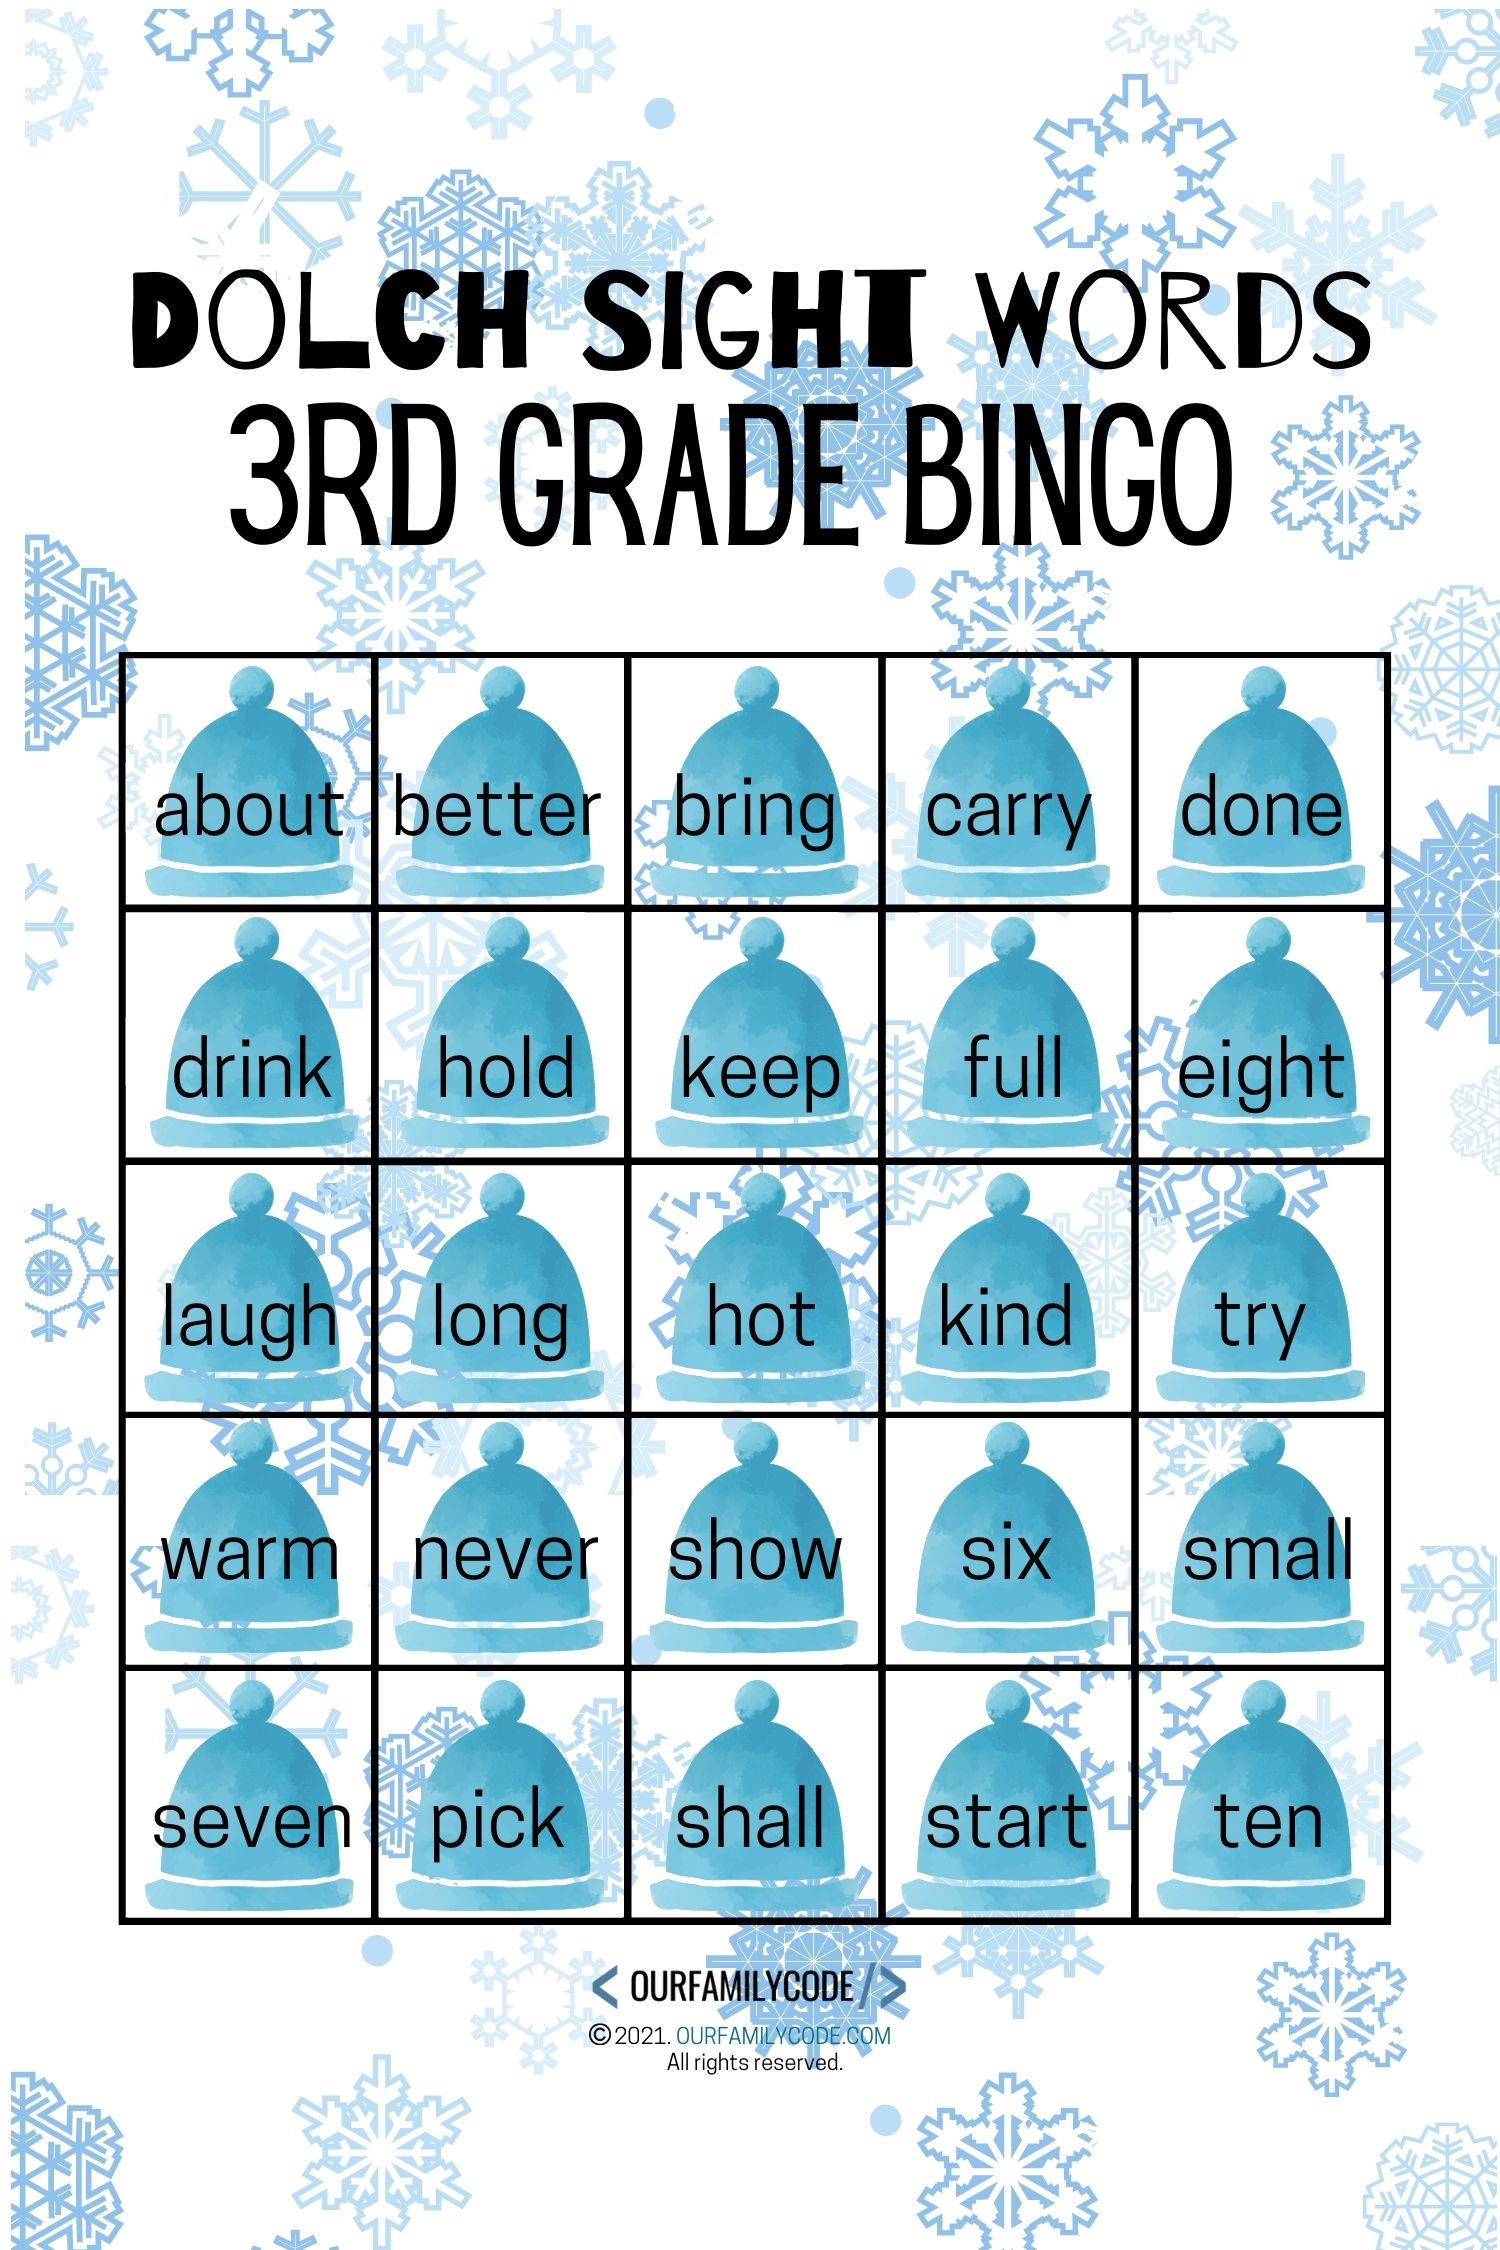 dolch sight word 3rd grade bingo cards